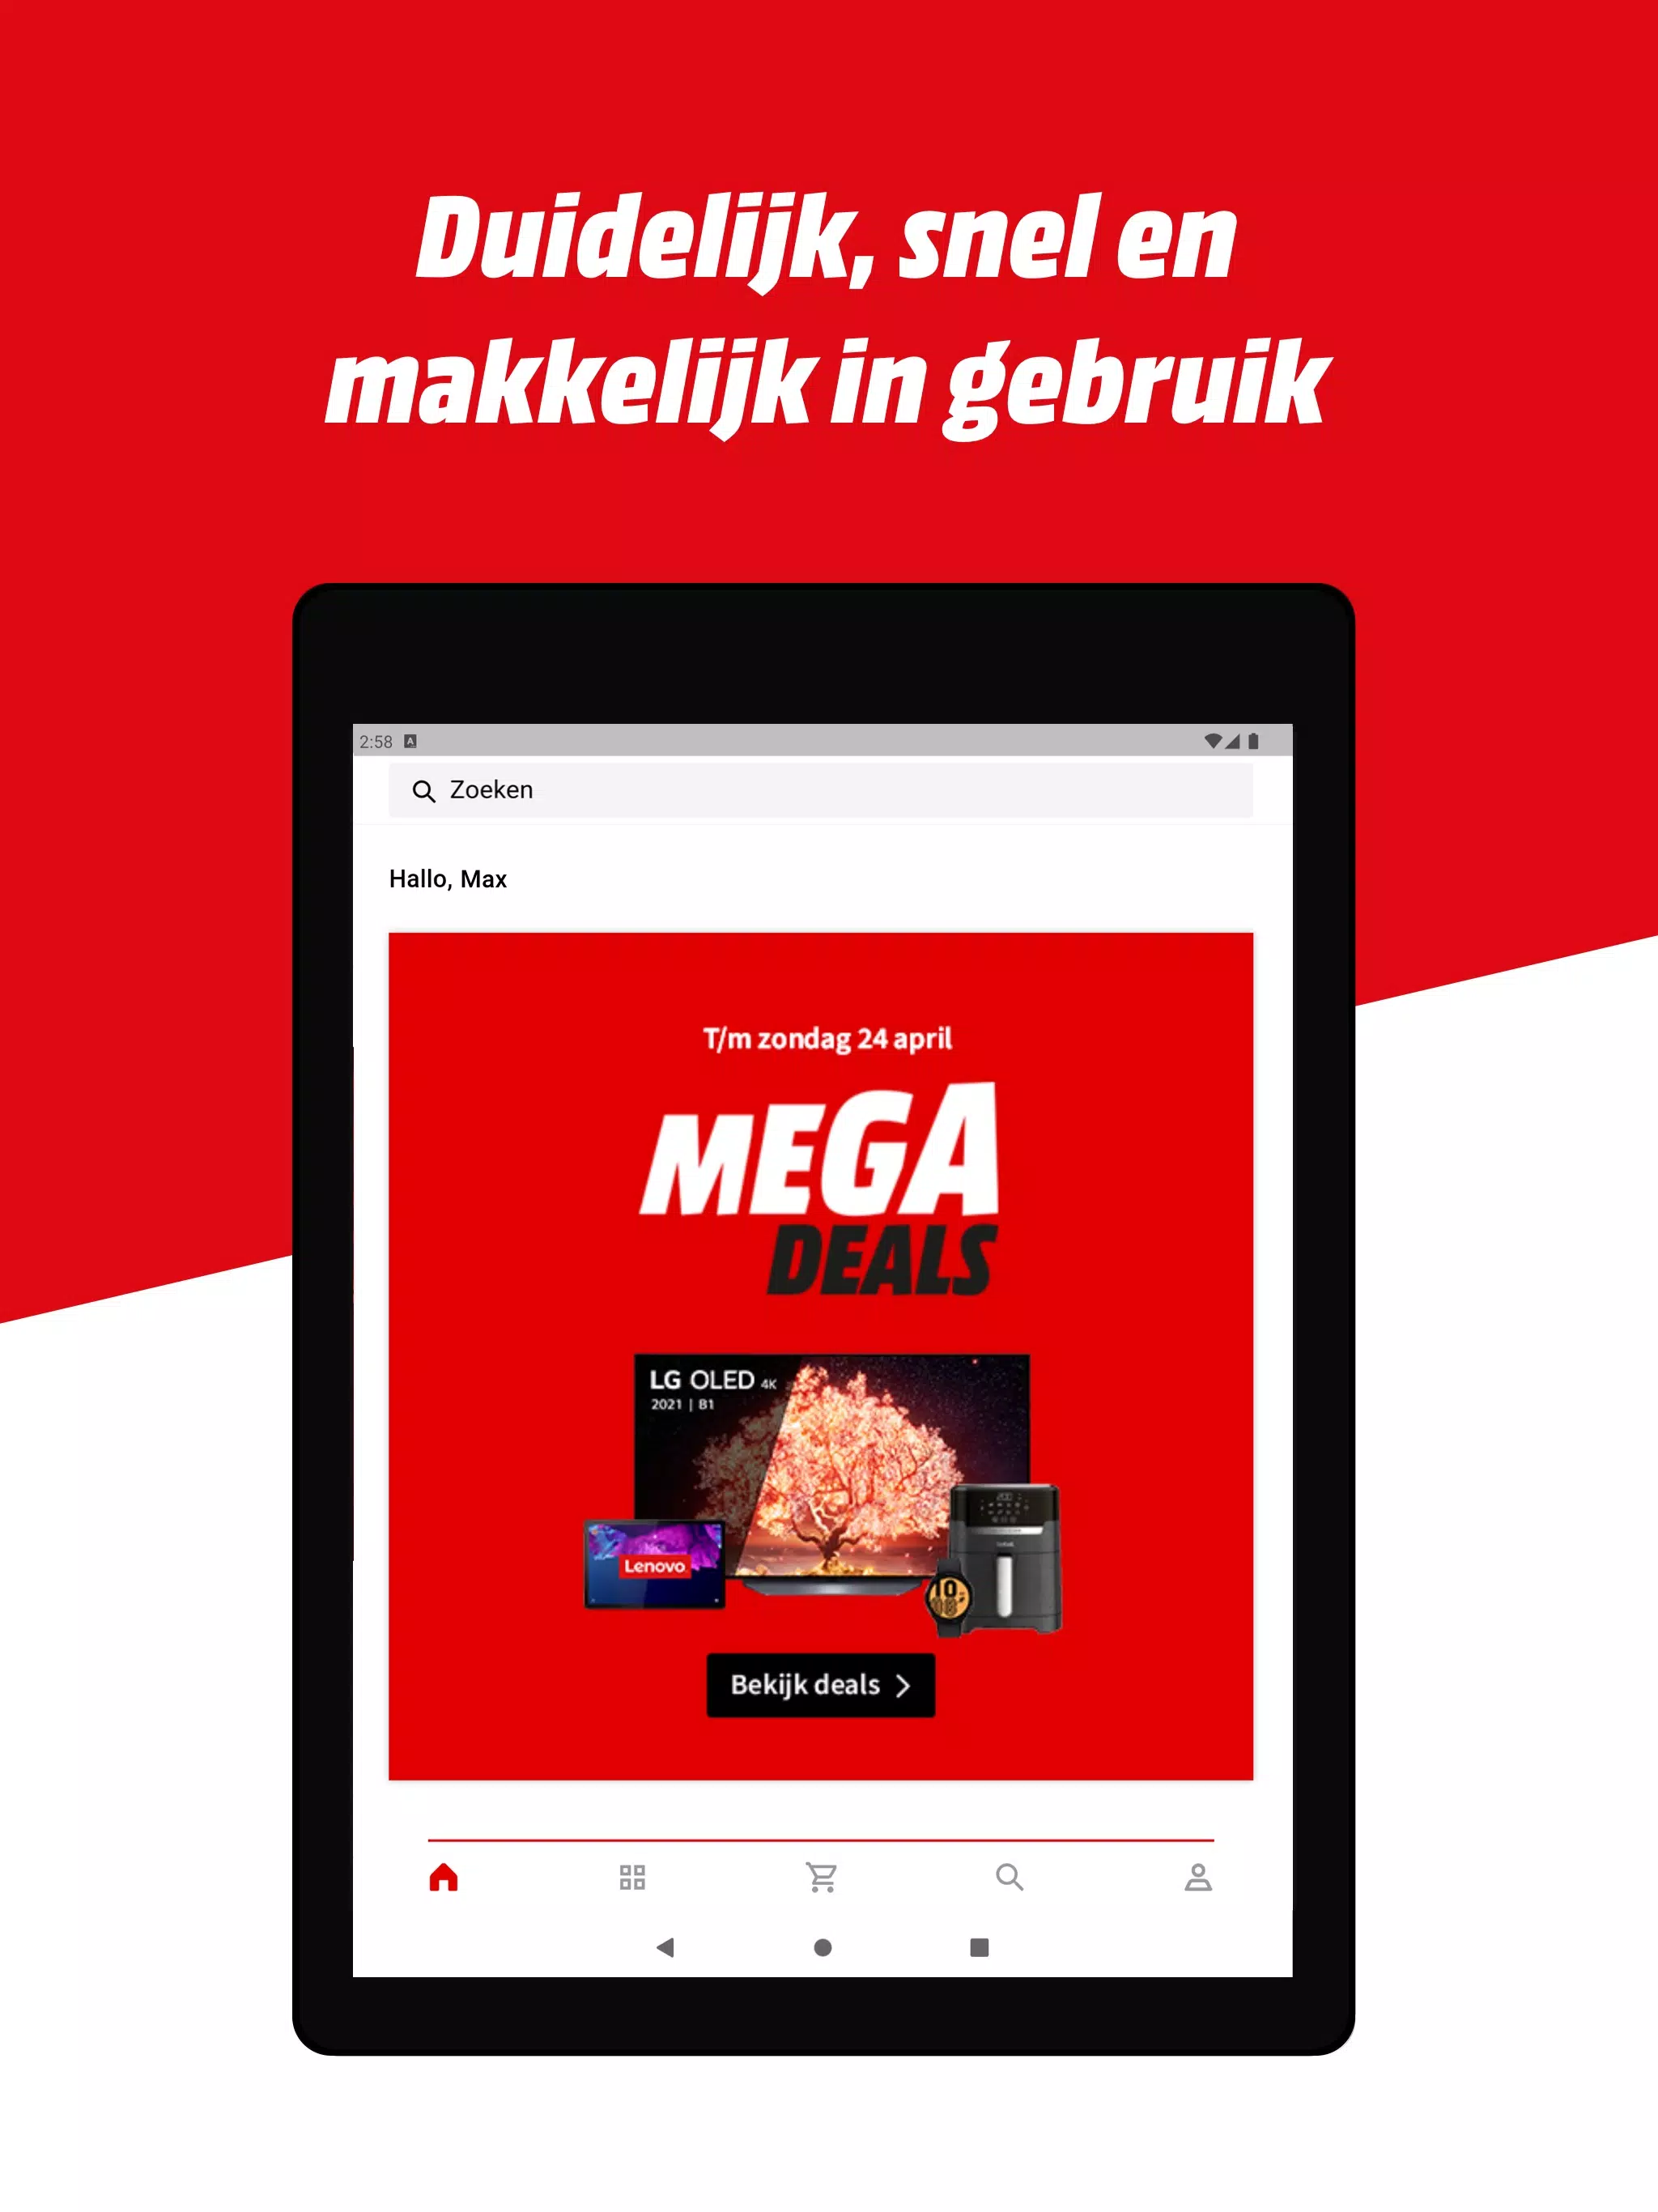 MediaMarkt Europe Apk Download for Android- Latest version 1.0- com. MediaMarkt.com